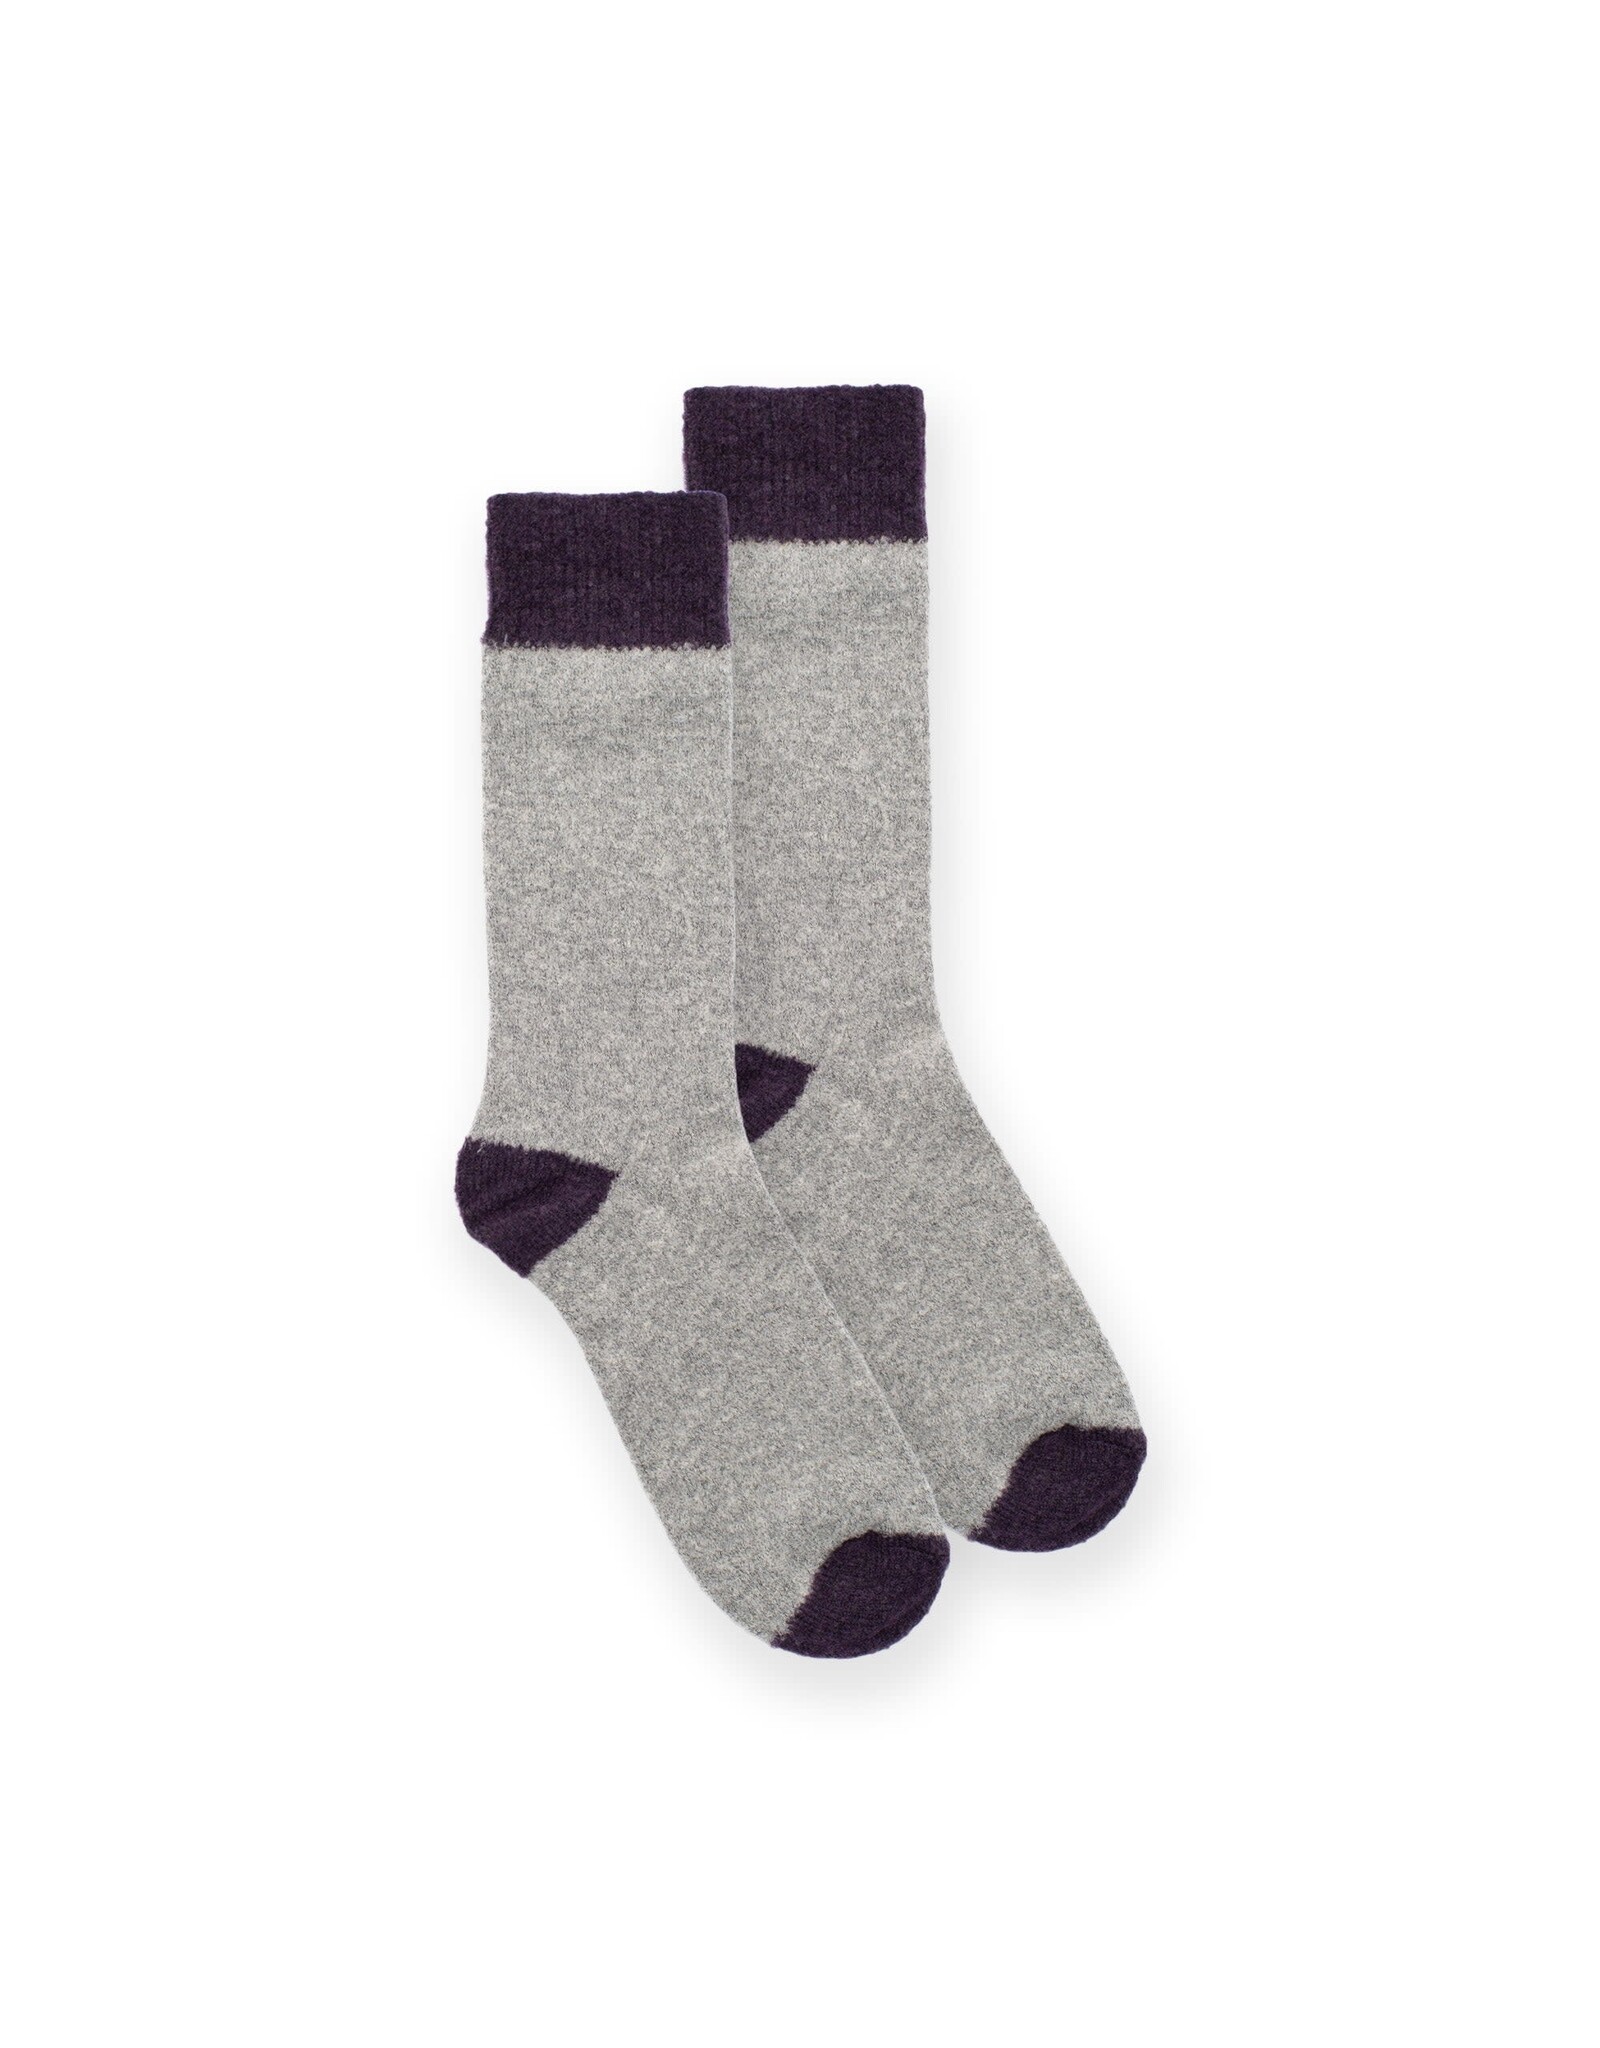 Wolvis Socks - Grey, Plum